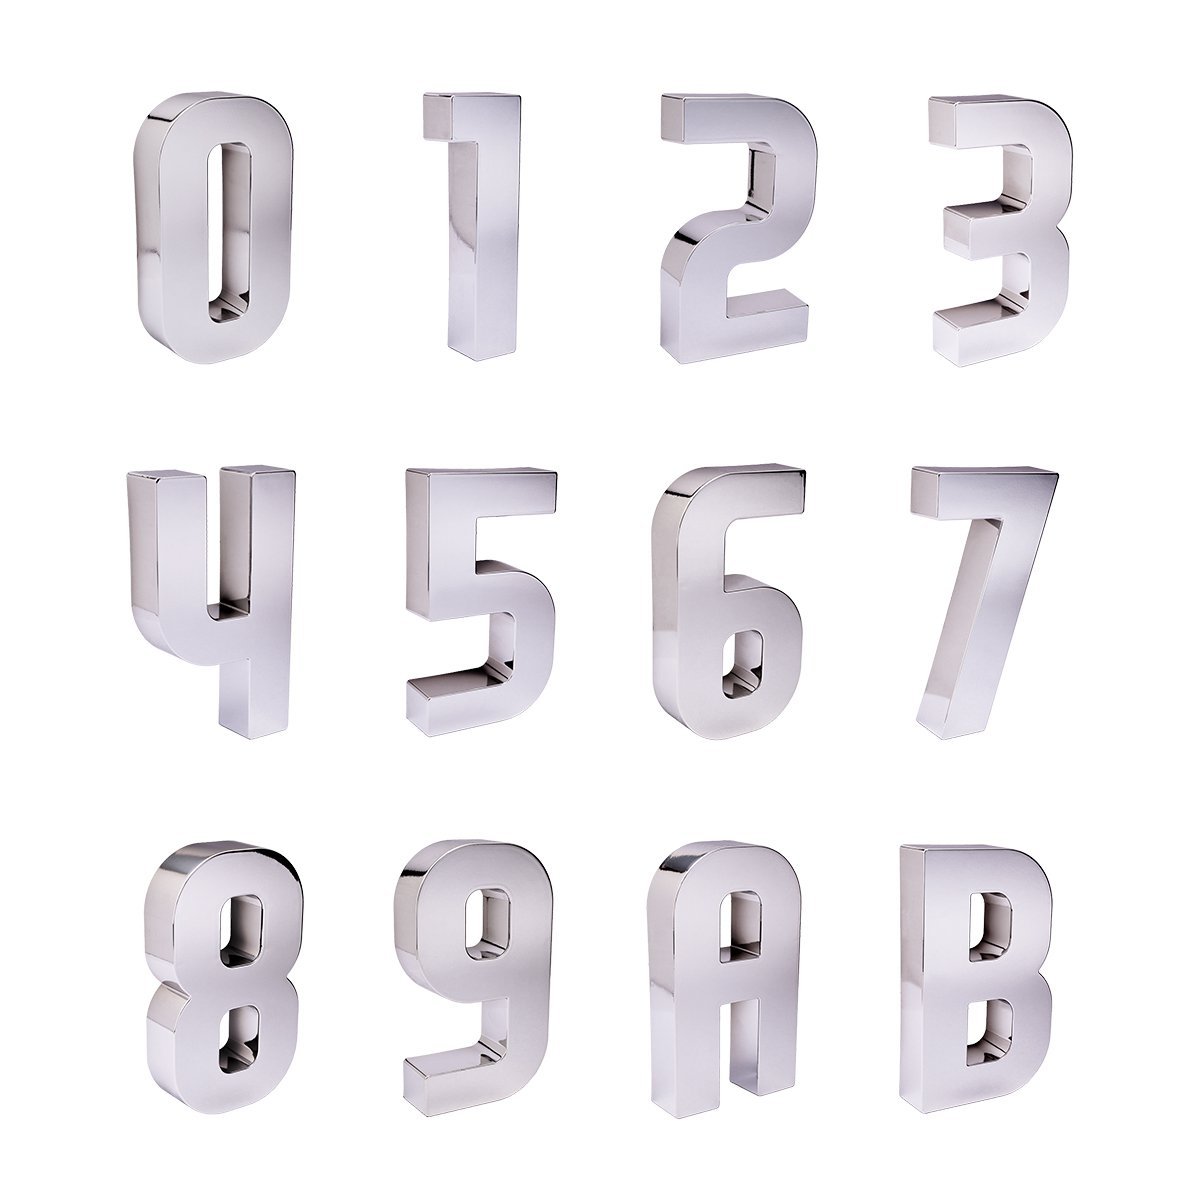 Números e Letras Residenciais / Comerciais Cromado 3D 19cm:4 - 2